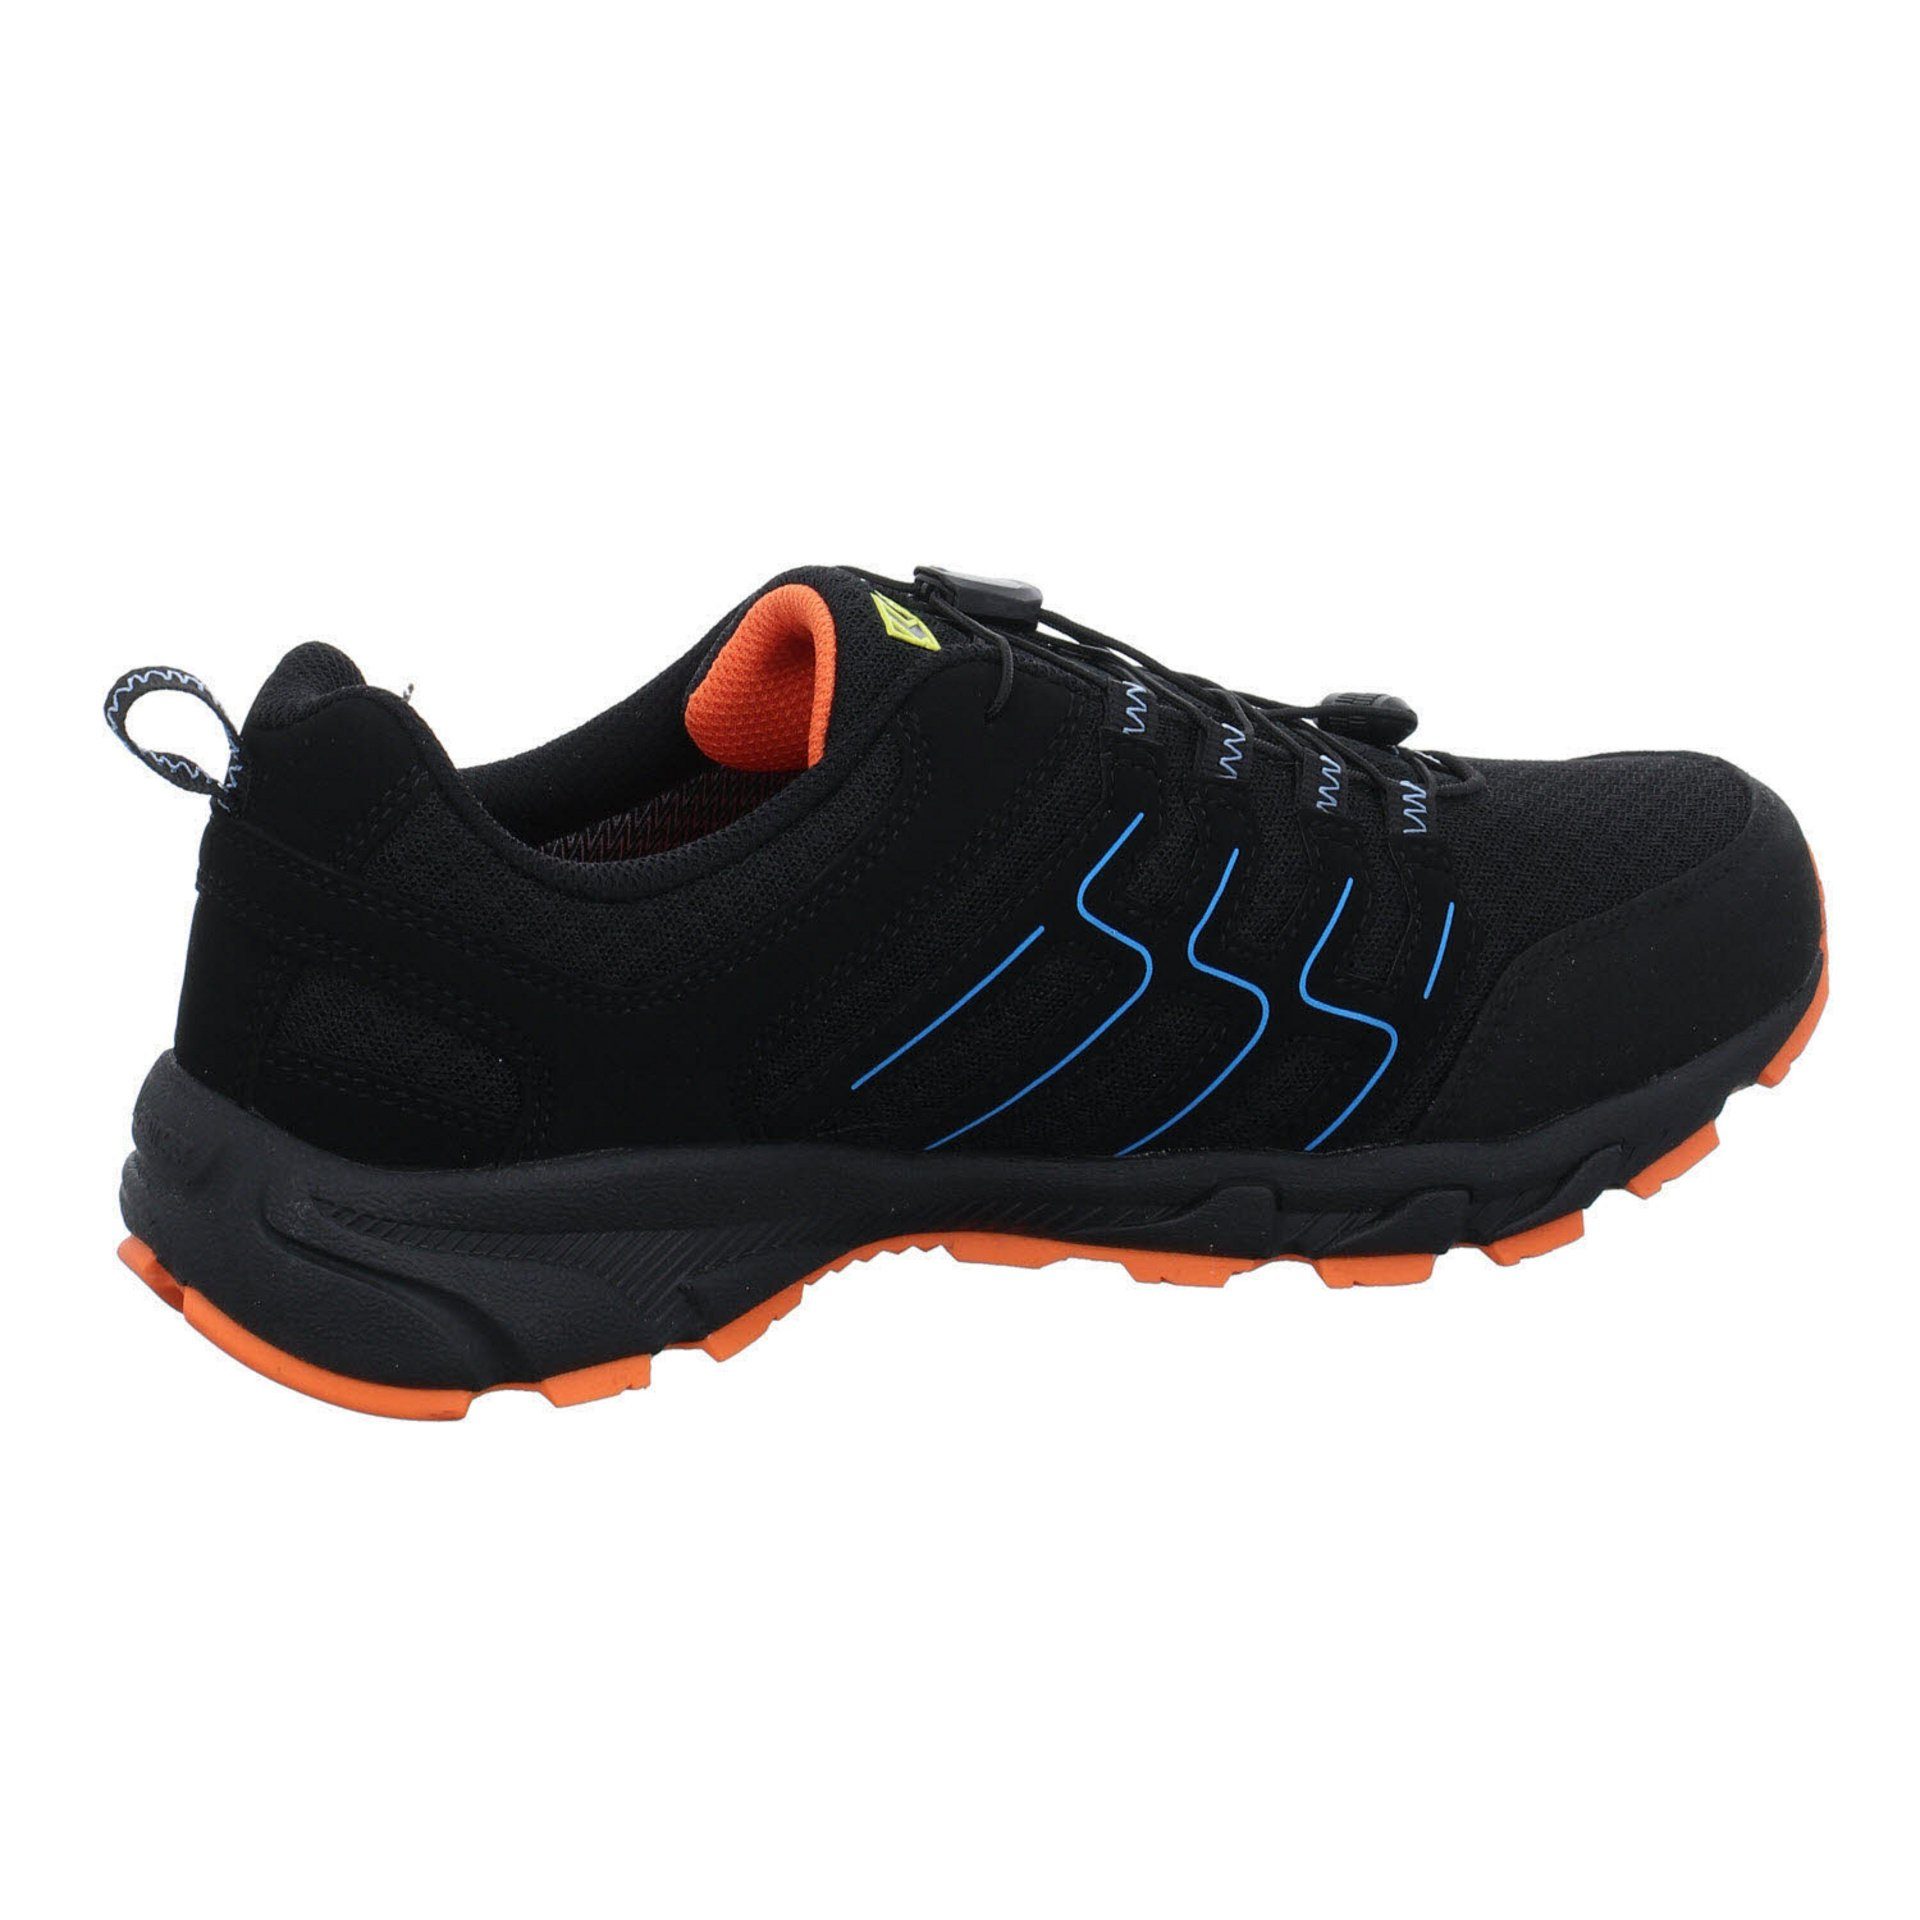 Kastinger Damen Schuhe Outdoor Synthetikkombination Outdoorschuh Outdoorschuh Black/Blue/Orange Trailrunner